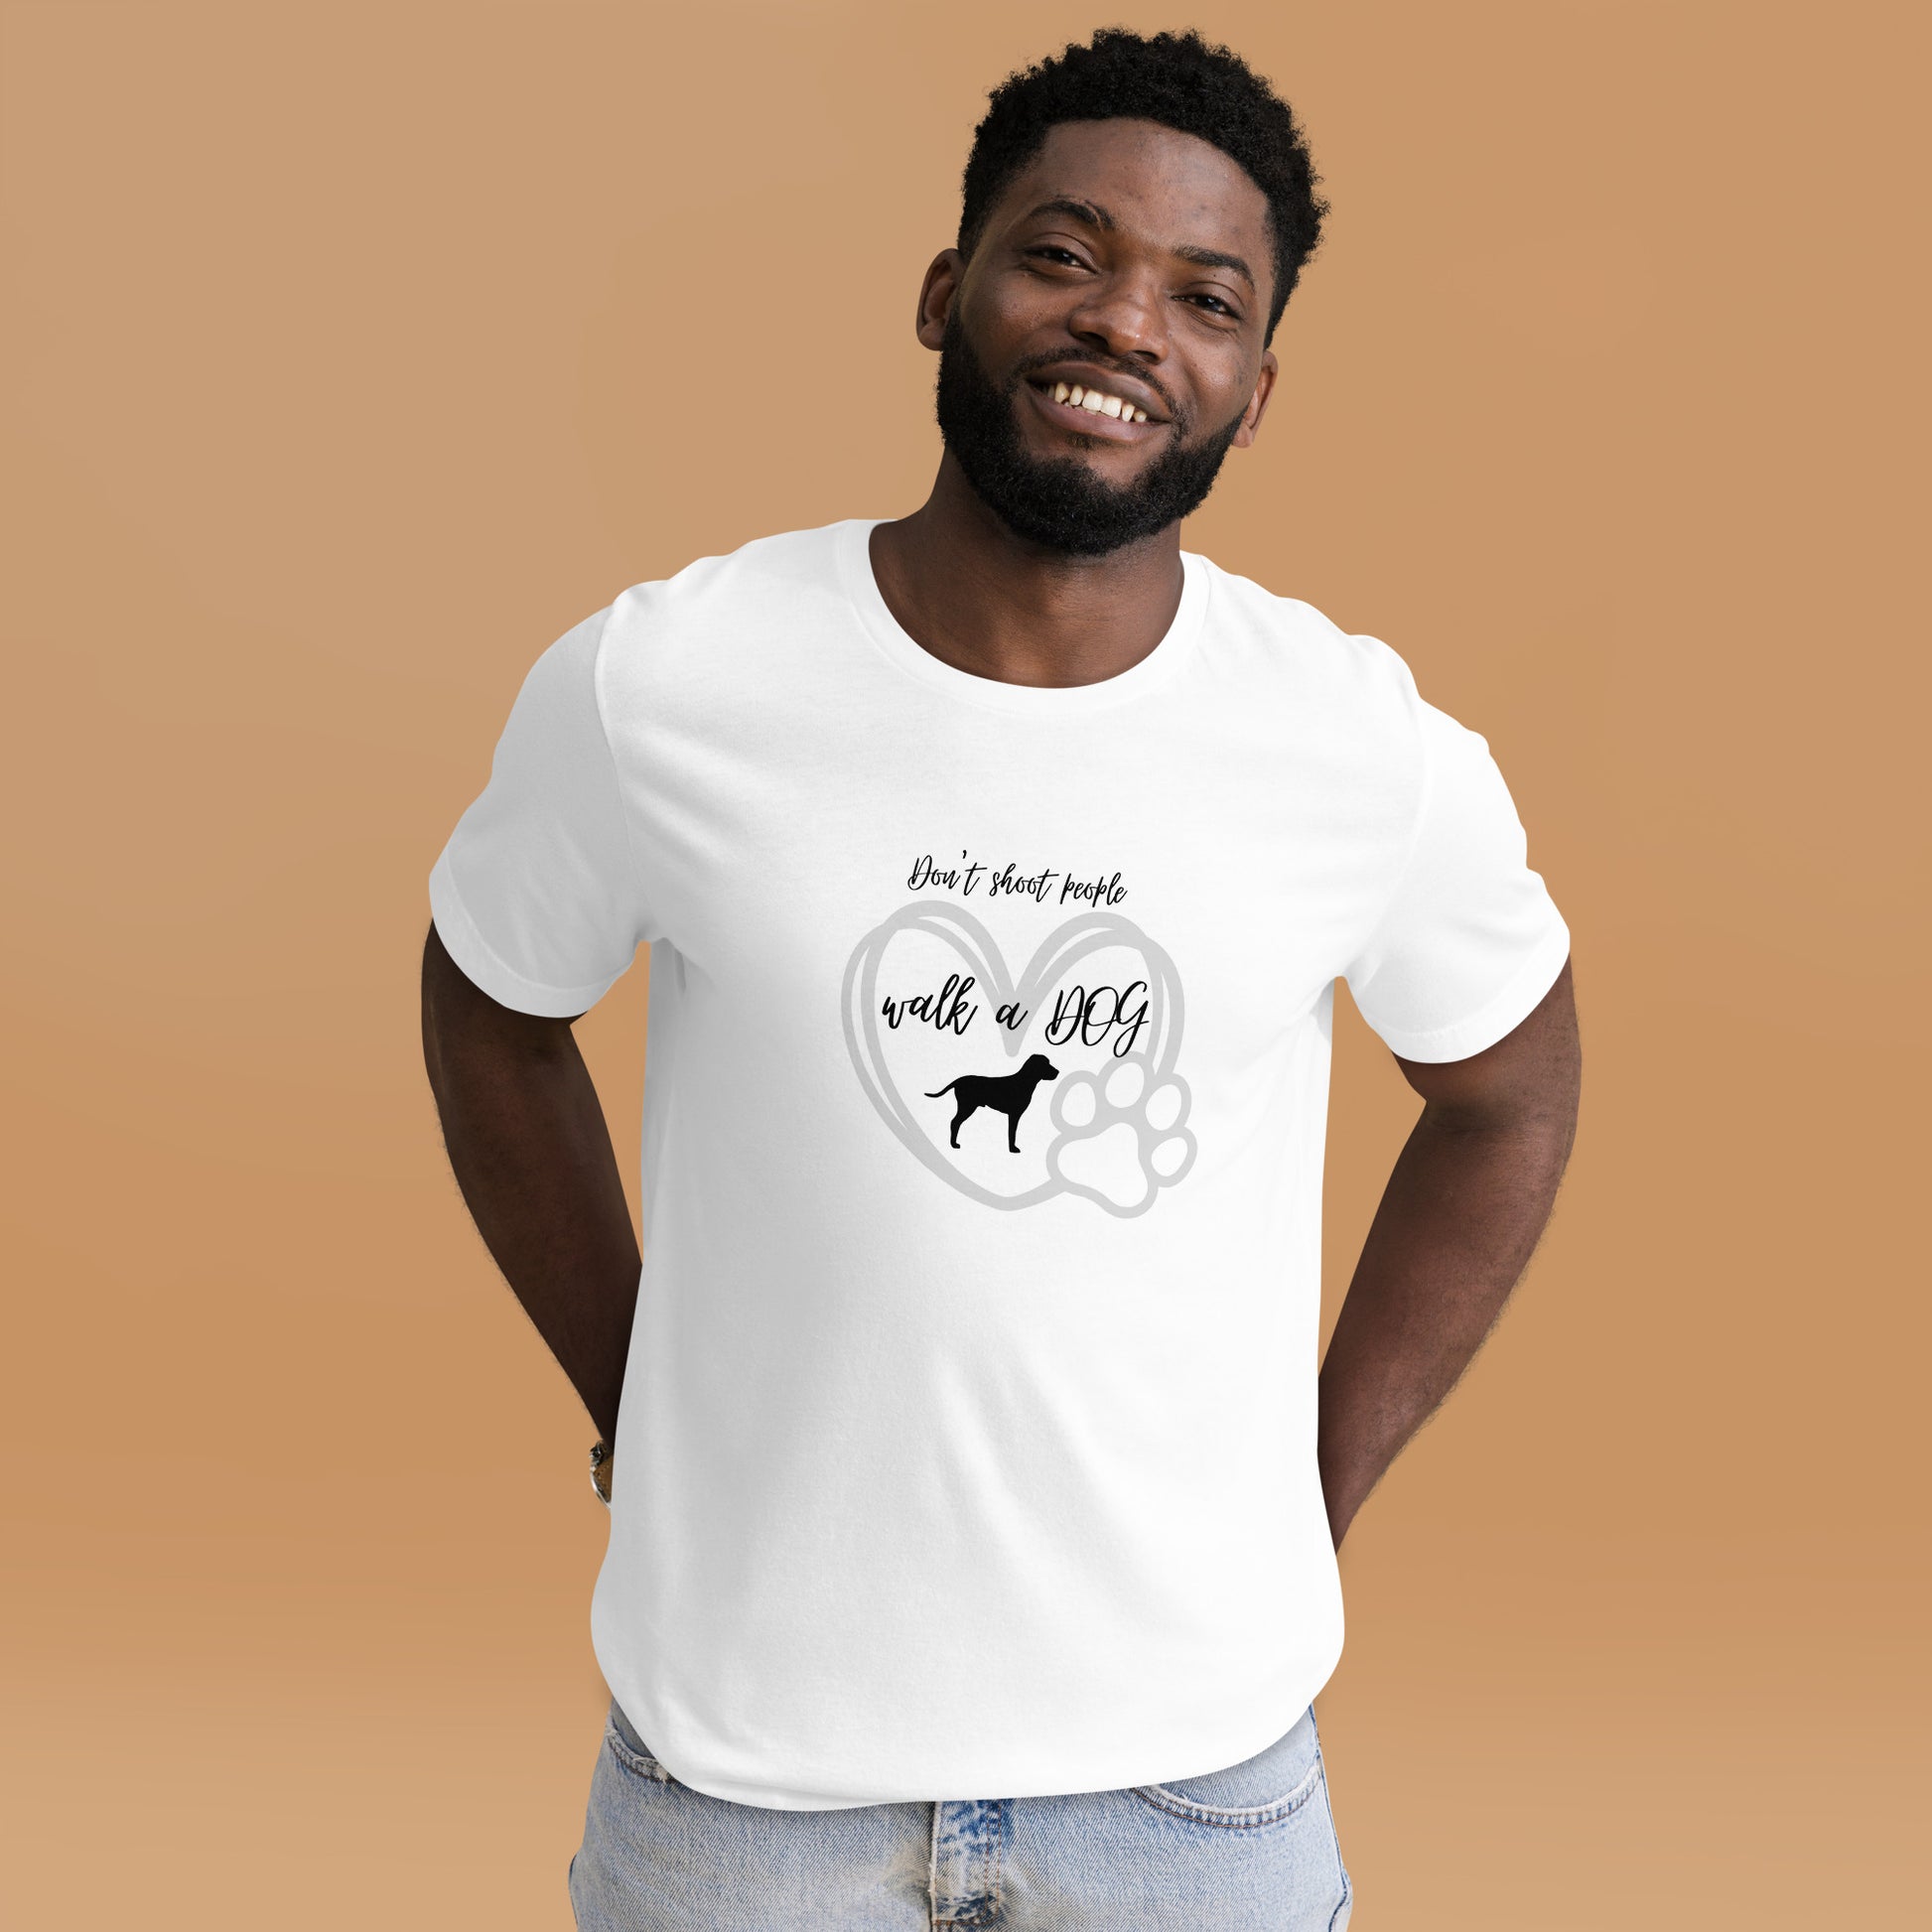 Dont Shoot people, walk a DOG T-shirt